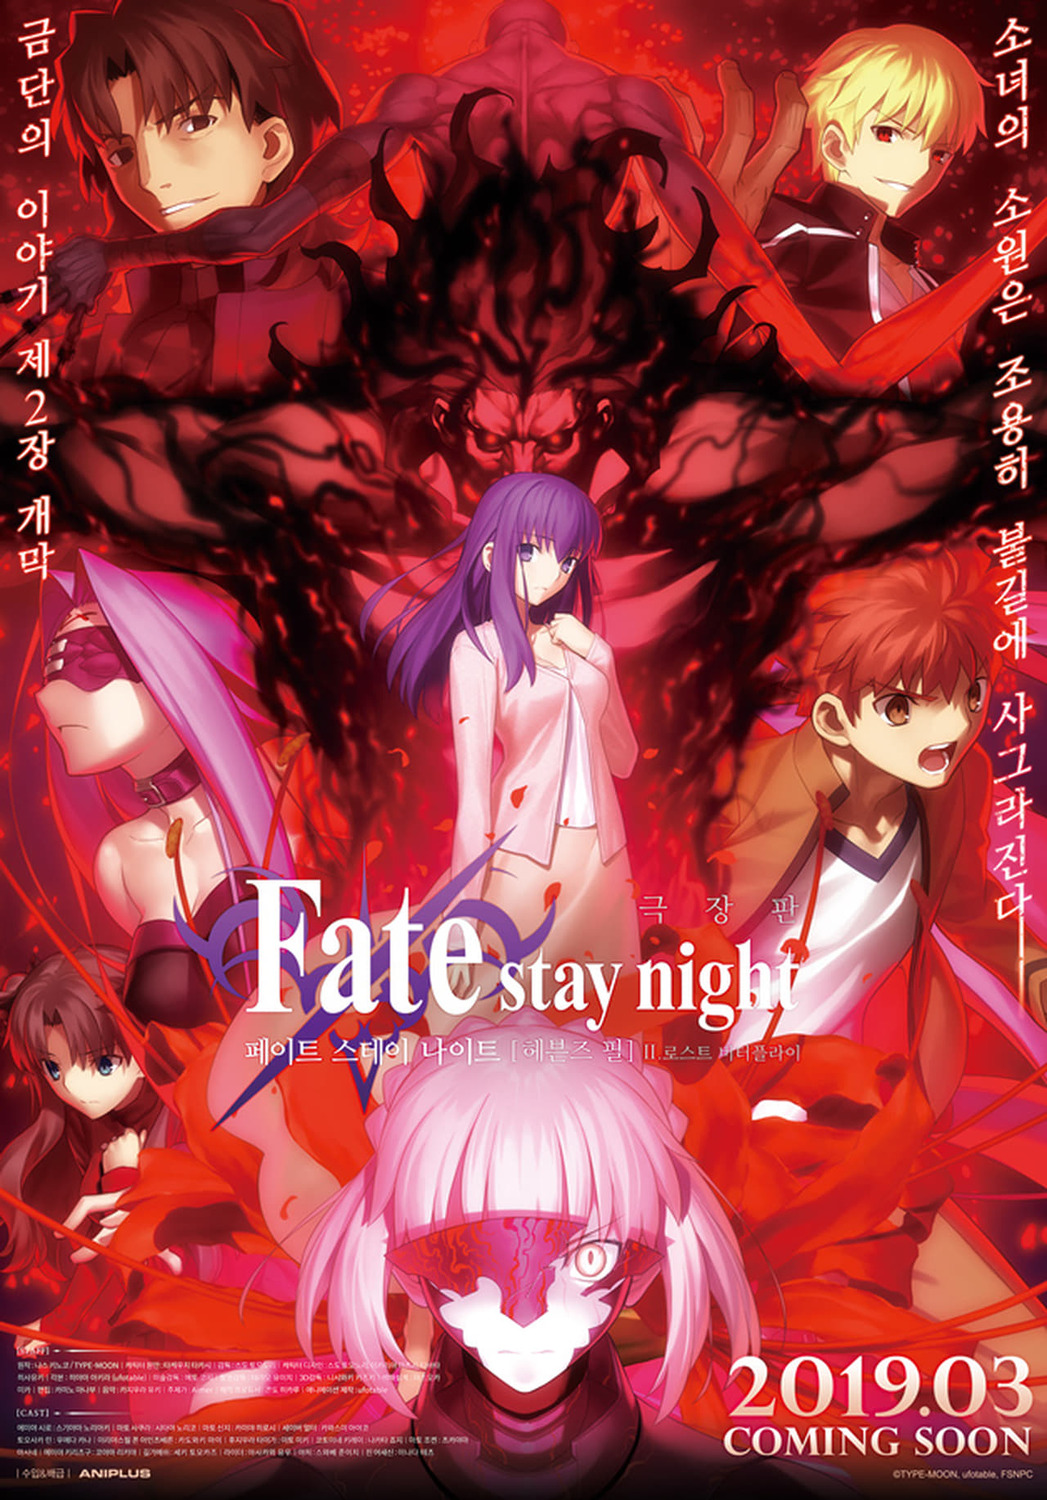 Extra Large Movie Poster Image for Gekijouban Fate/Stay Night: Heaven's Feel - II. Lost Butterfly 